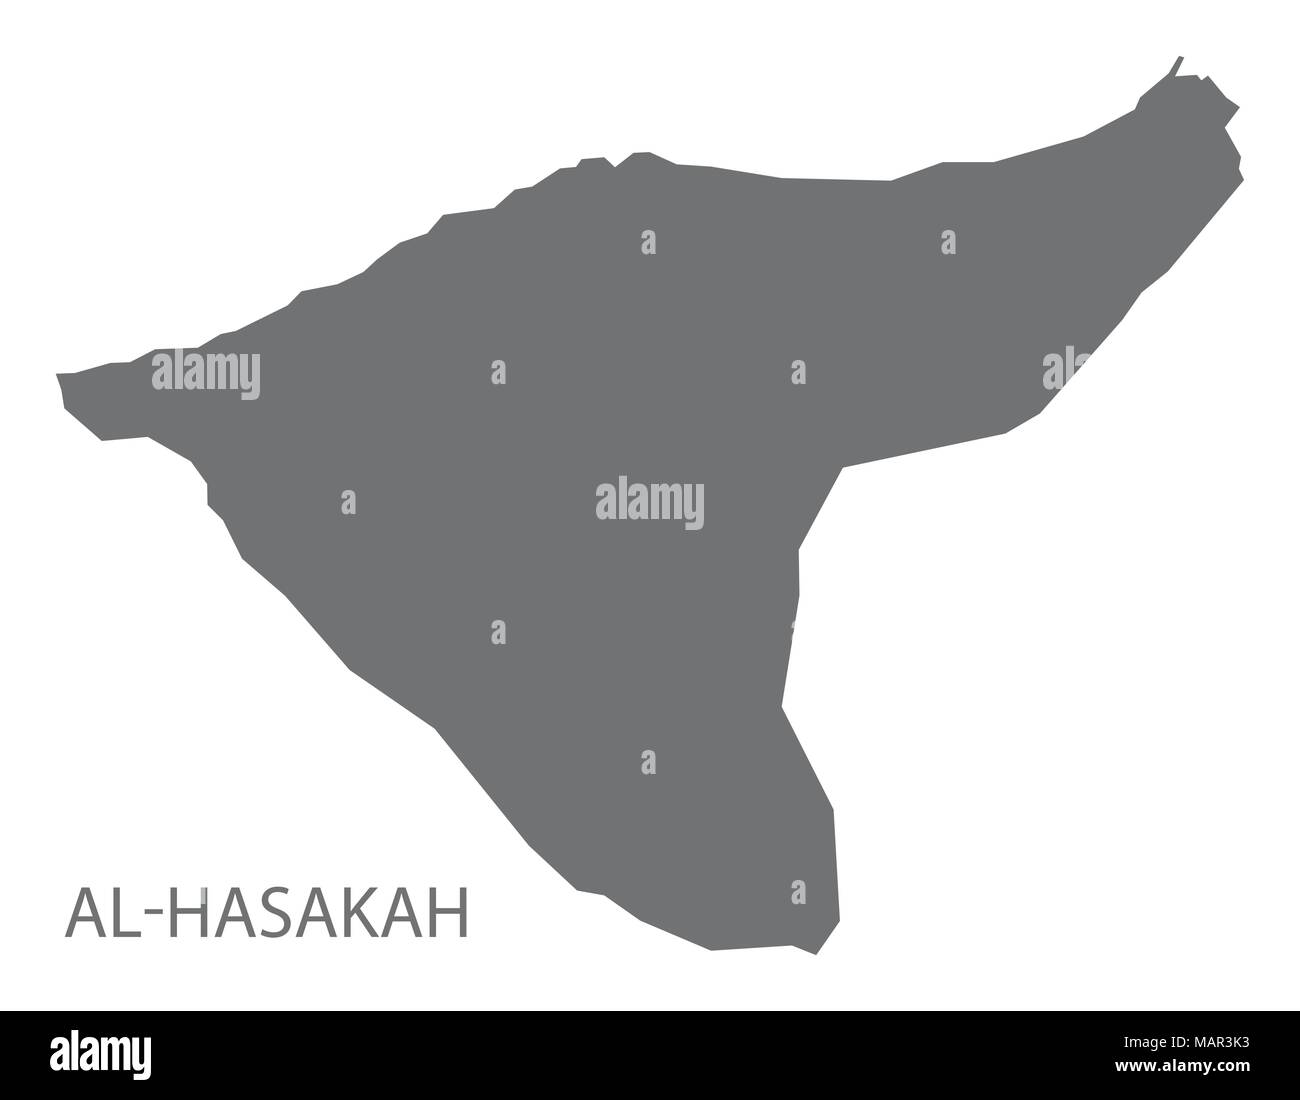 Al-Hasakah map of Syria grey illustration shape Stock Vector